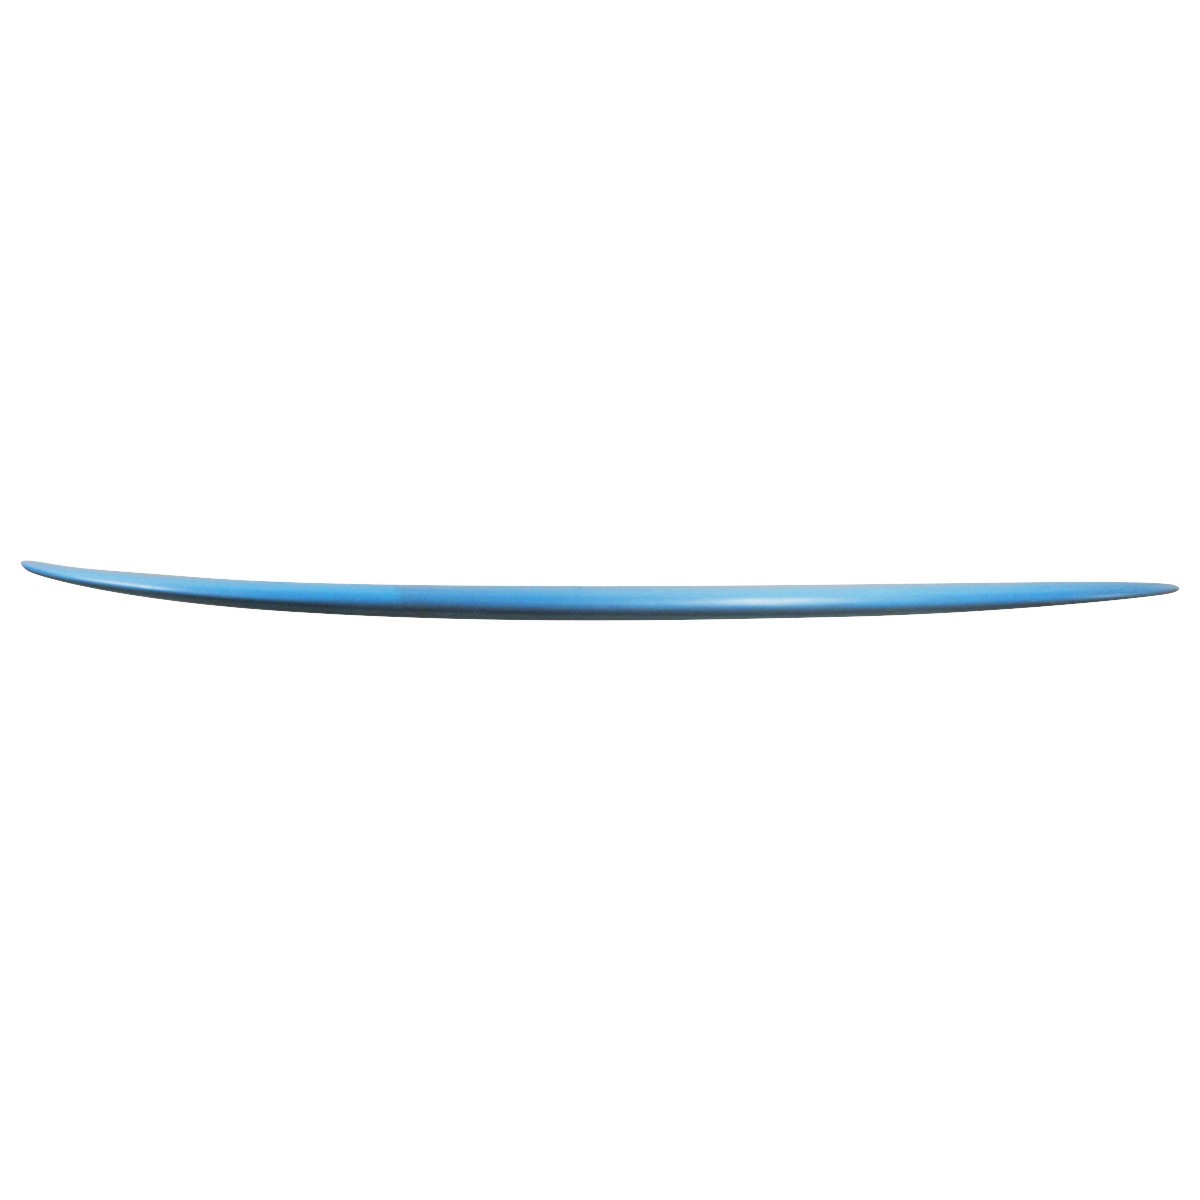 Arenal : Micro Glide 7'10"